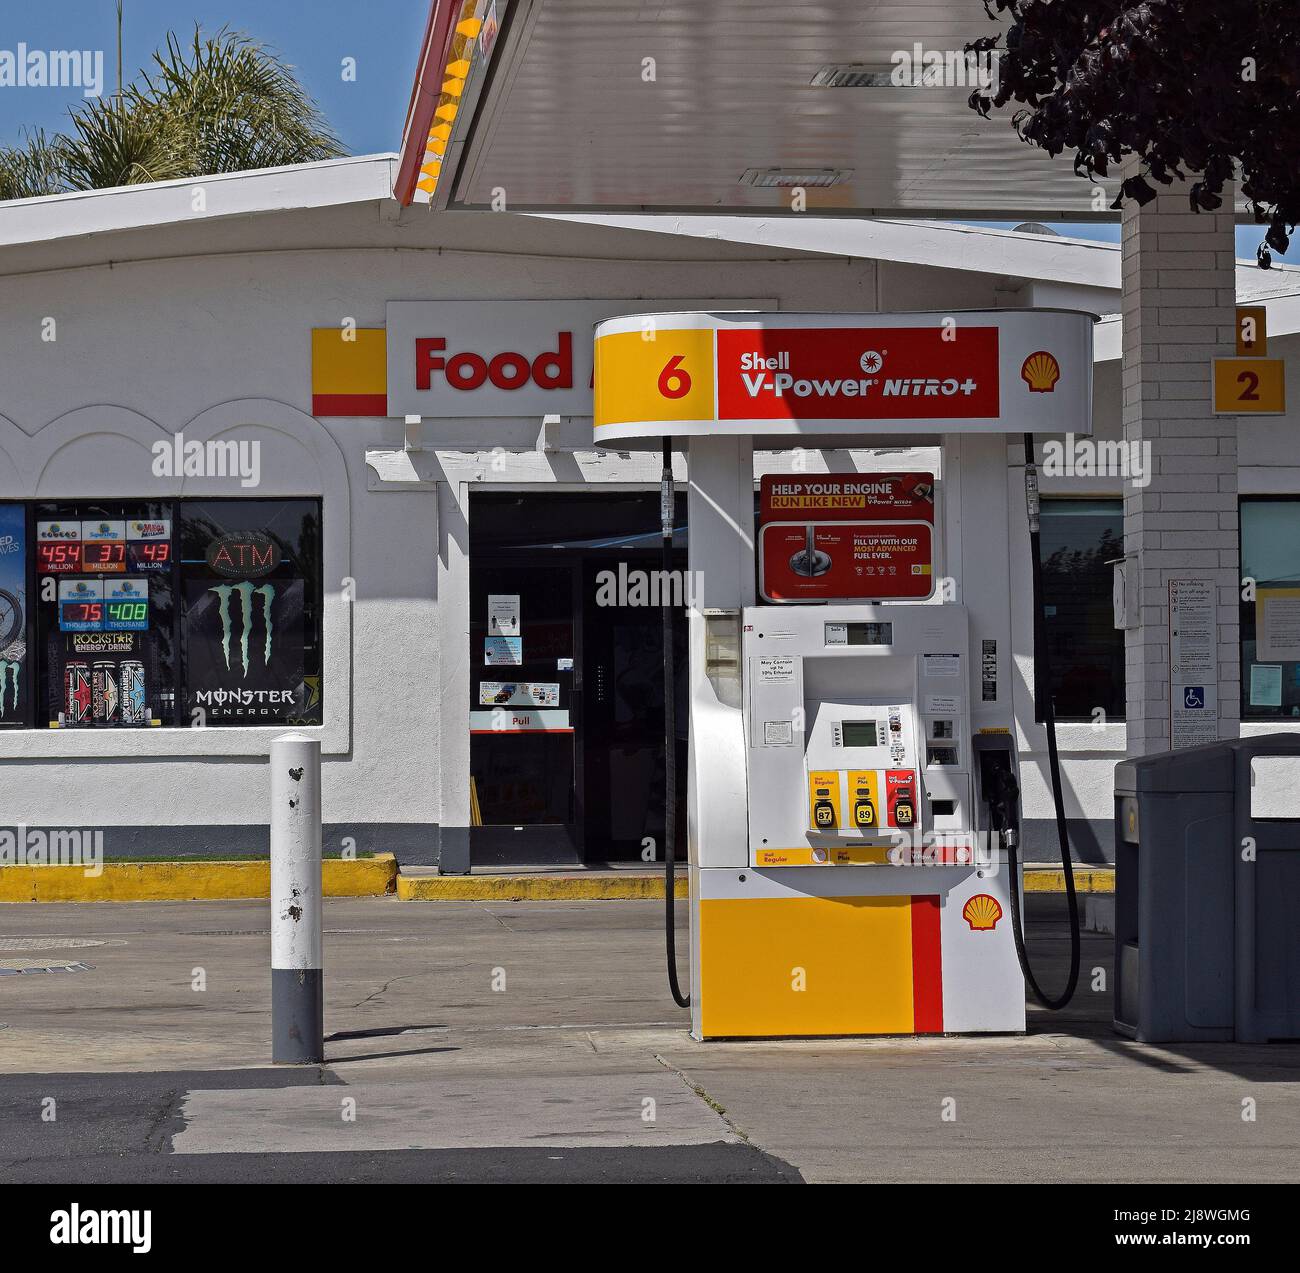 Reifen-Luftpumpe an Tankstelle - USA Stockfotografie - Alamy